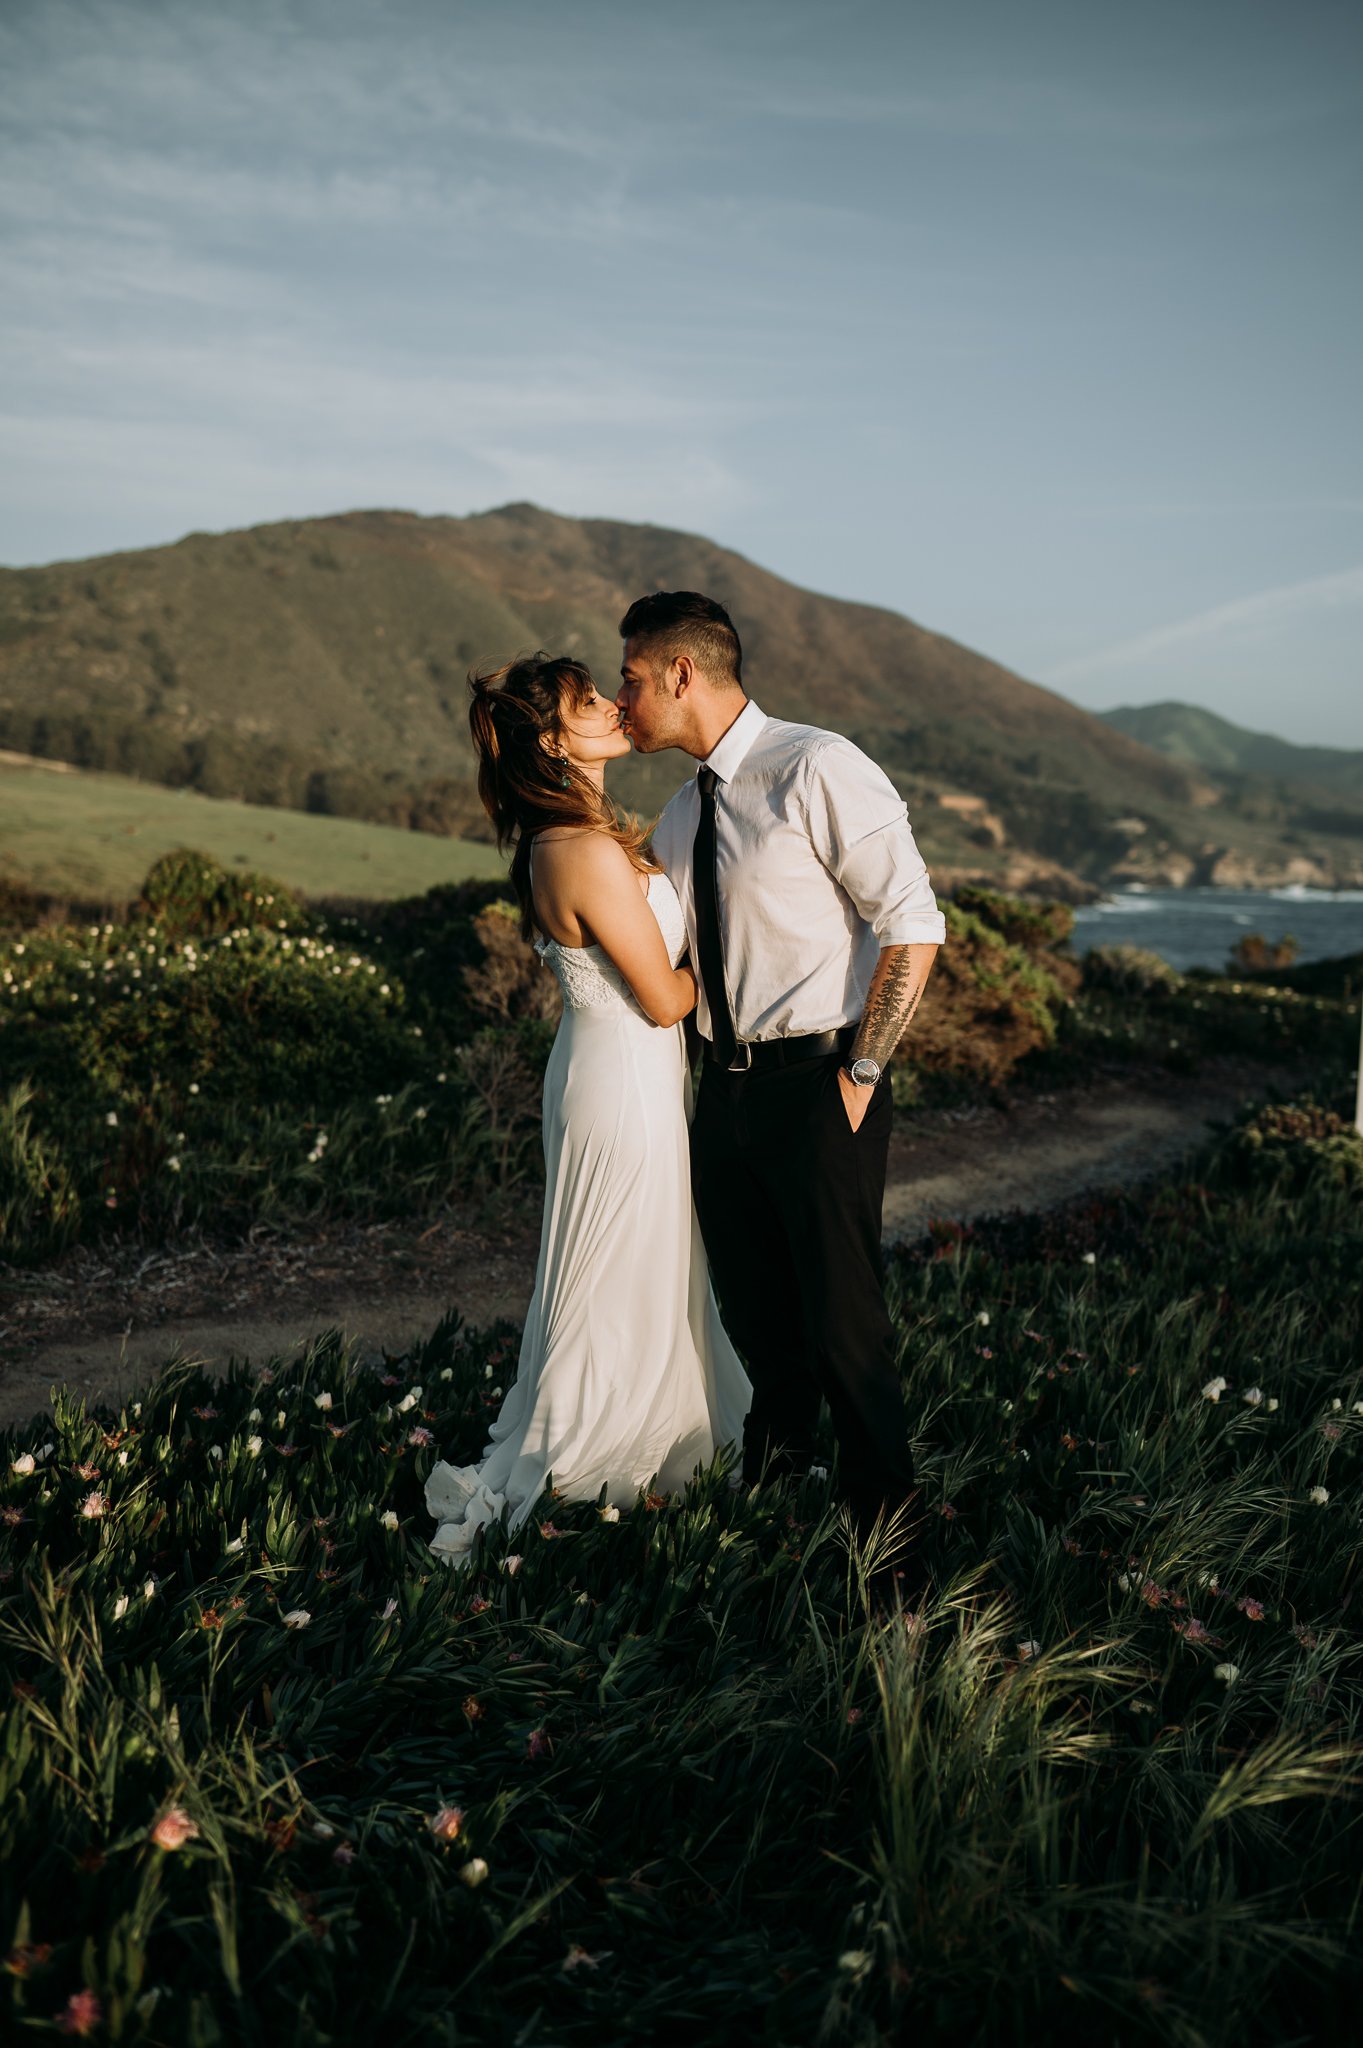 Newlyweds-photo-session-couple-cliffside-Big-Sur-California